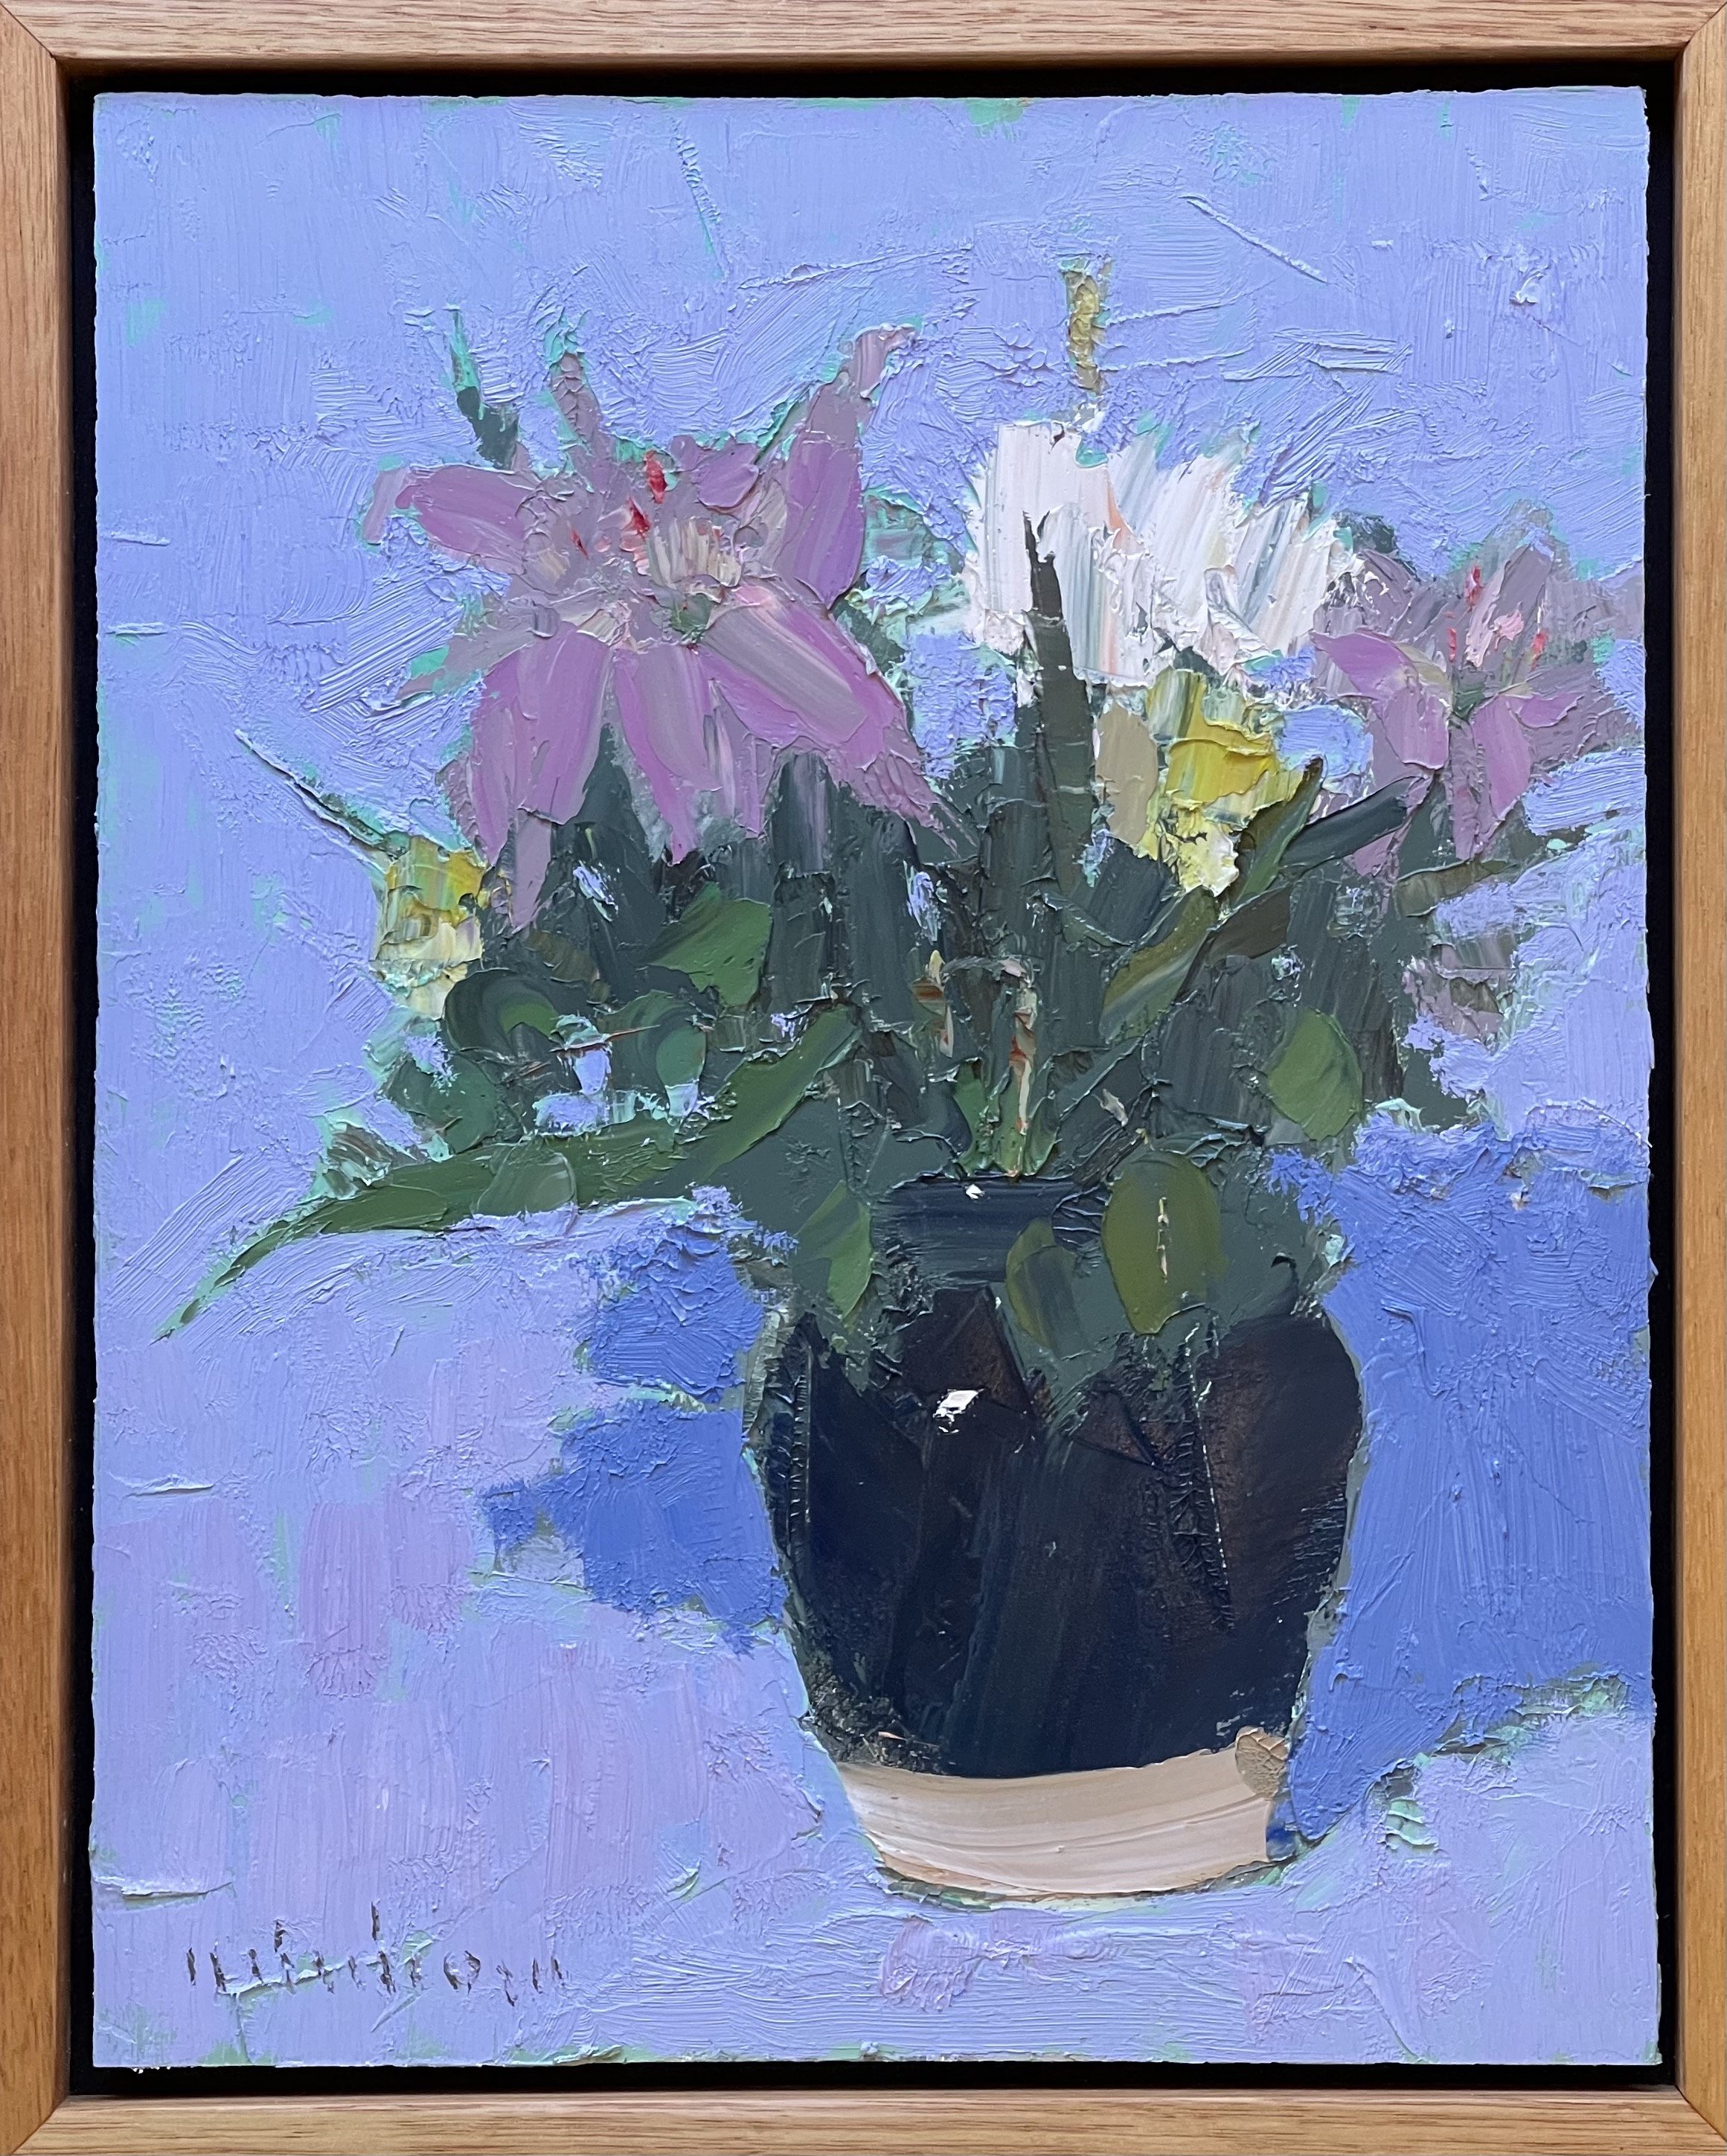 MINHAN CHO Lillies In A Vase 28x35cm framed oil on board $1100